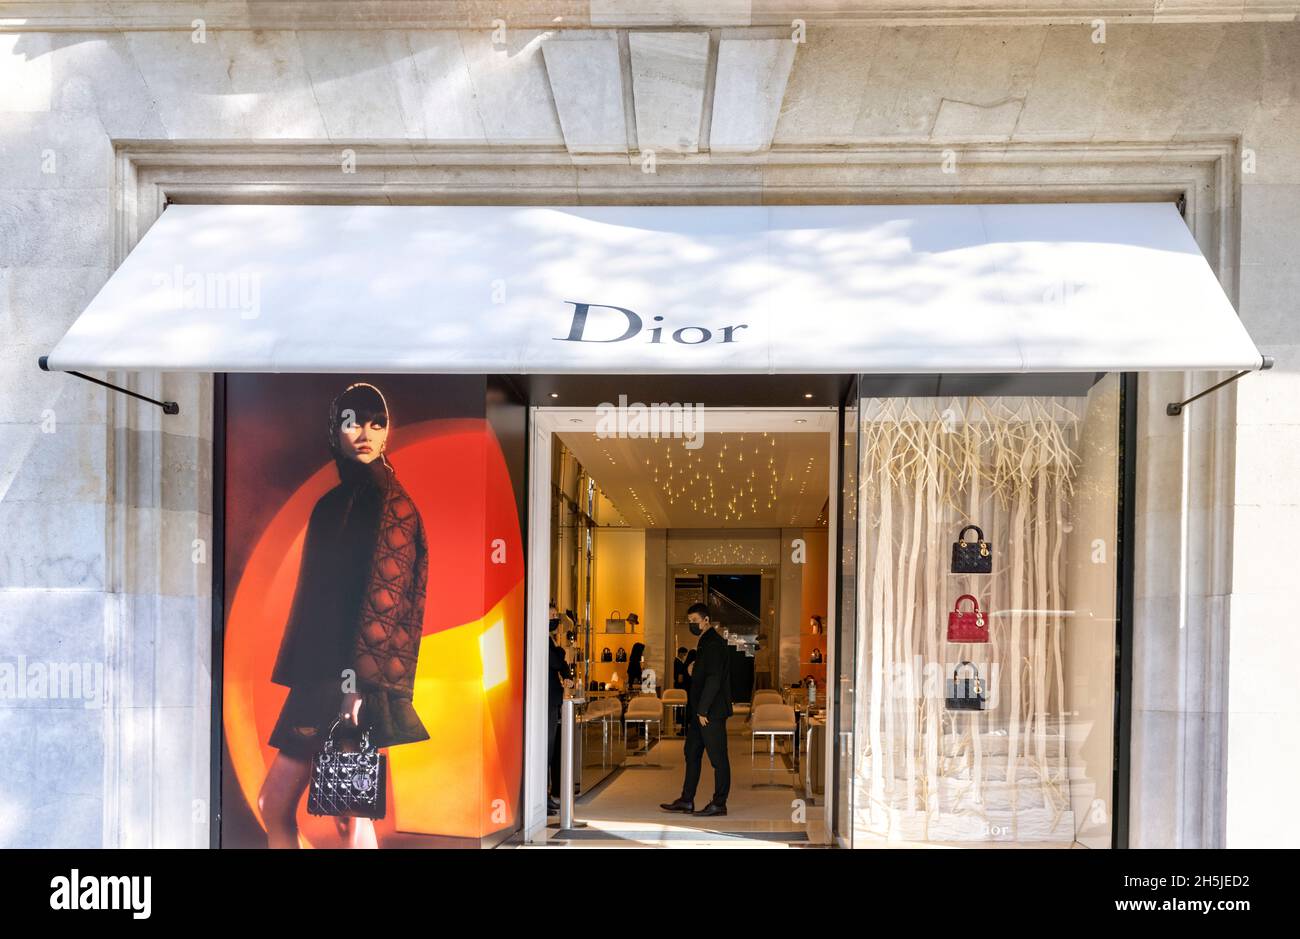 Dior shop front Passeig de Gracia, Barcelona Spain Stock Photo - Alamy